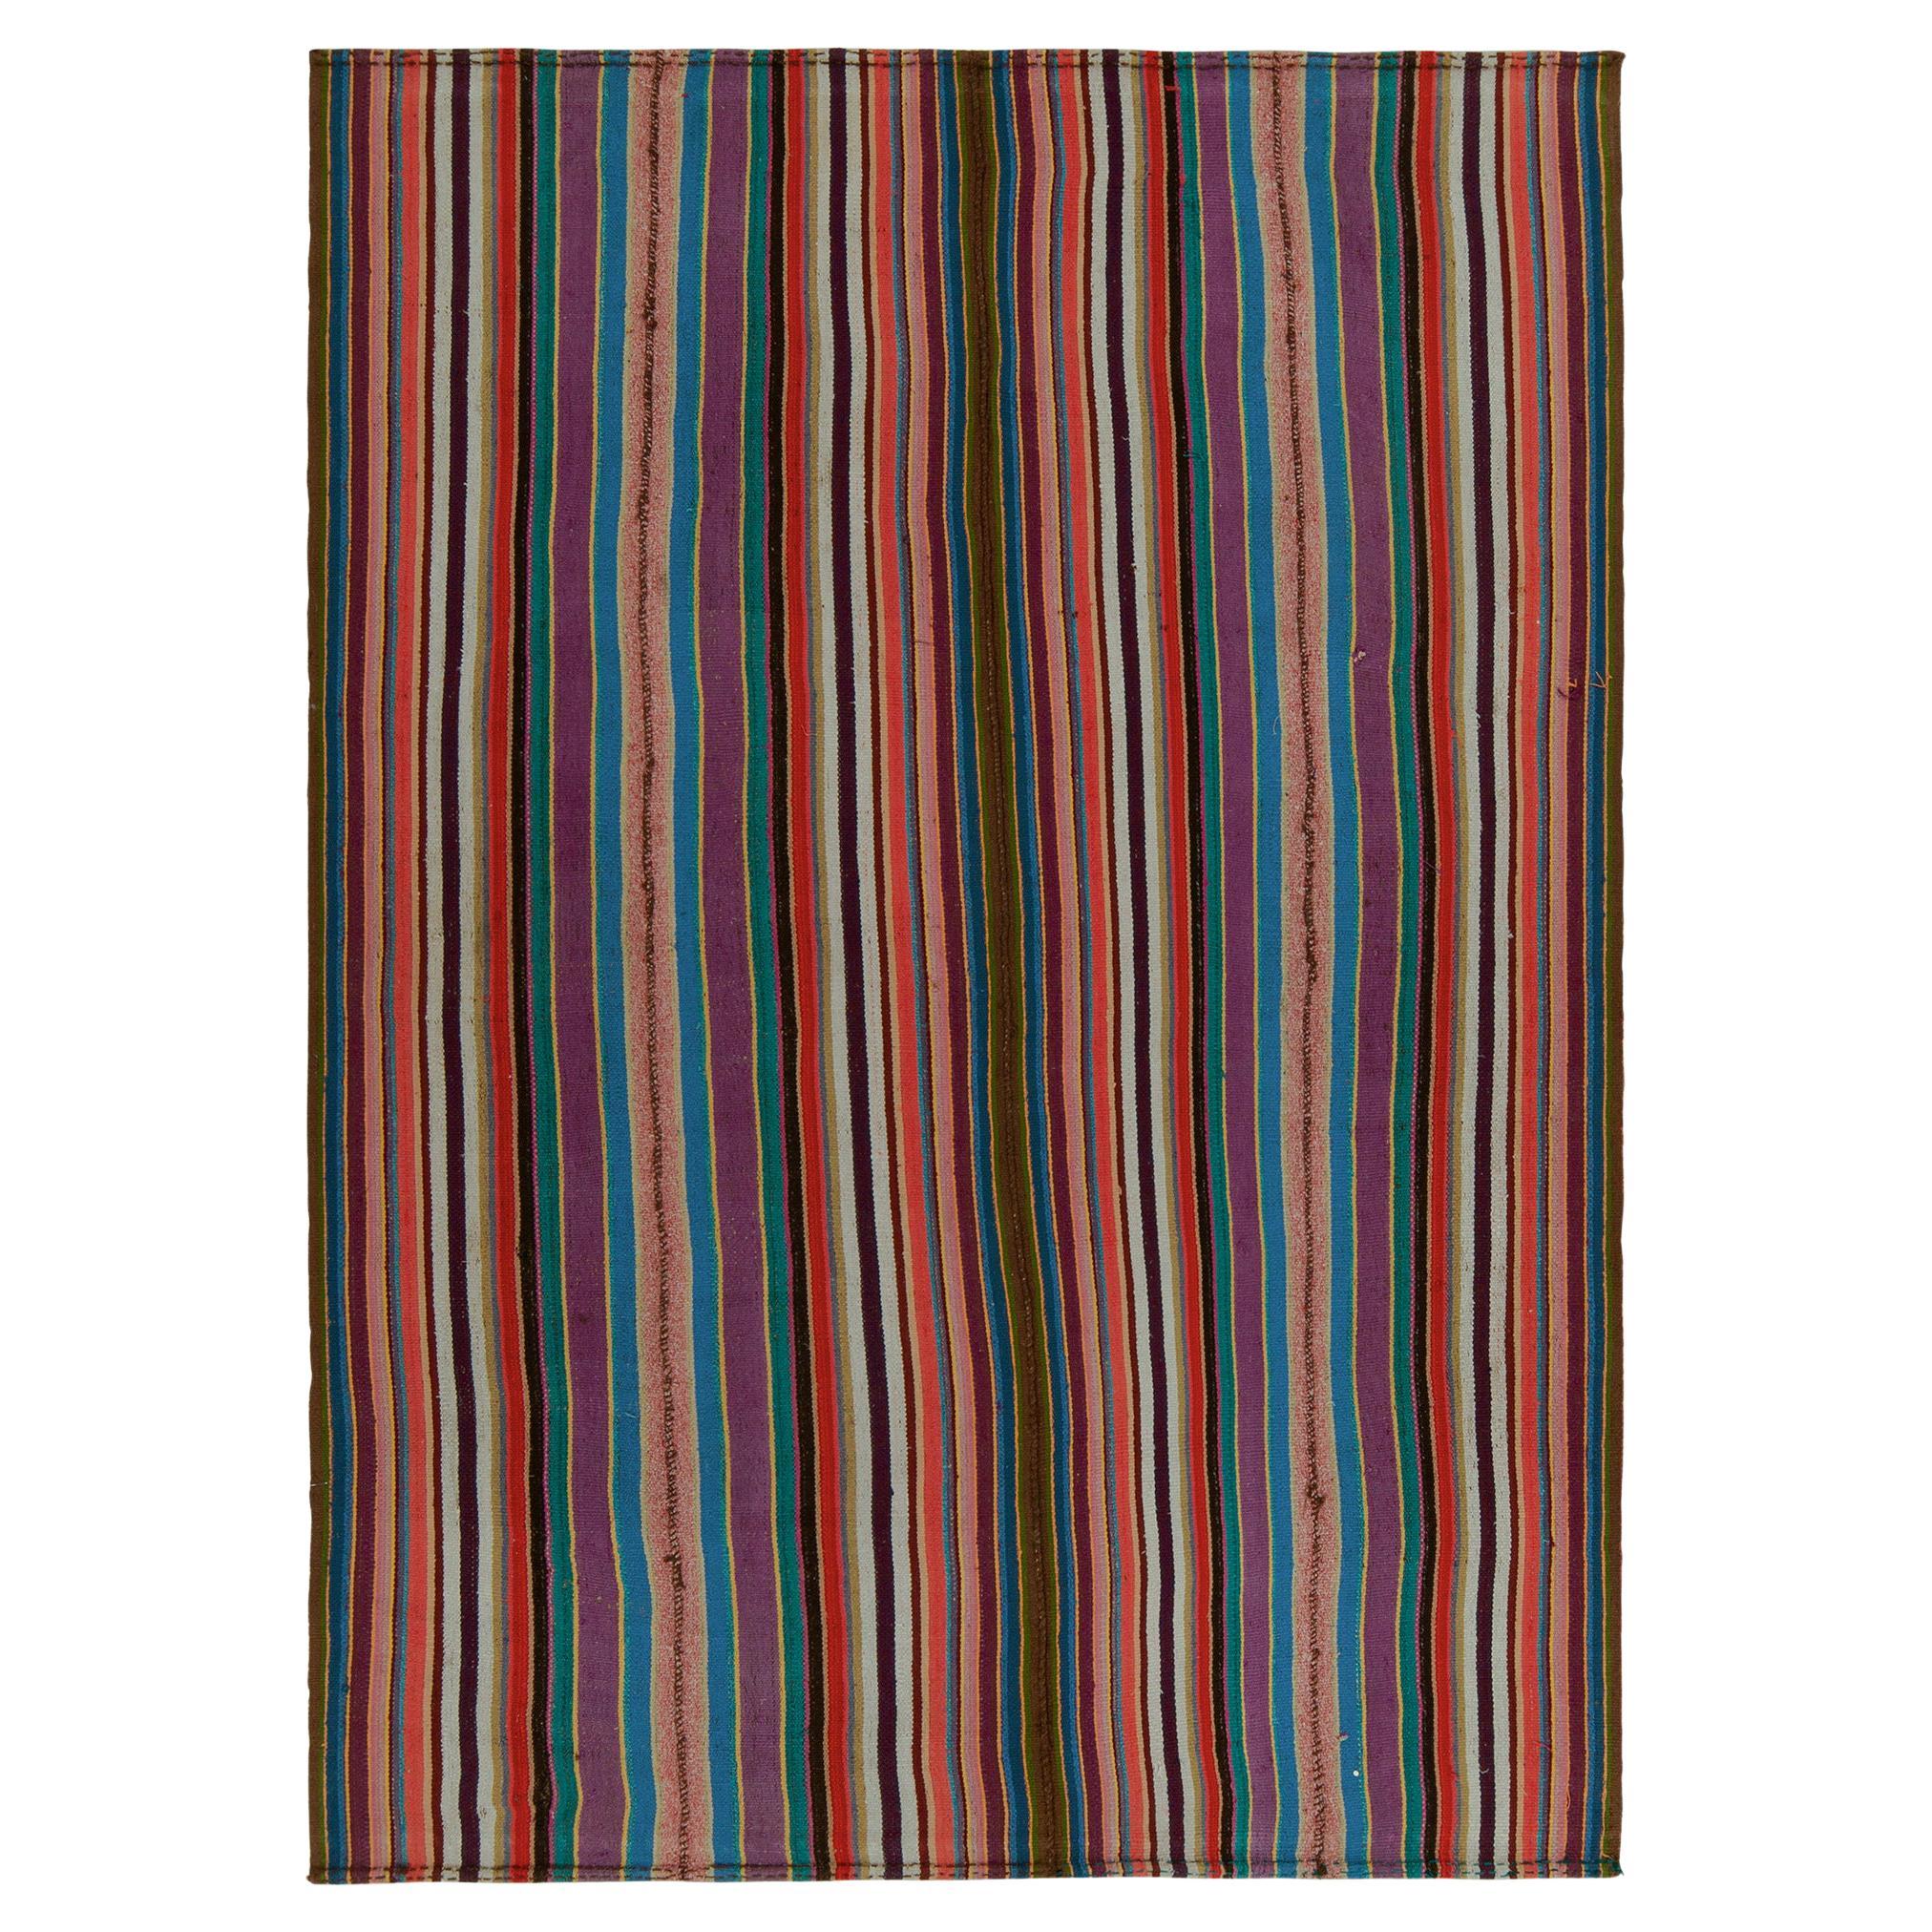 1950s Vintage Chaput Kilim Rug in Multicolor Stripes, Patterns by Rug & Kilim For Sale